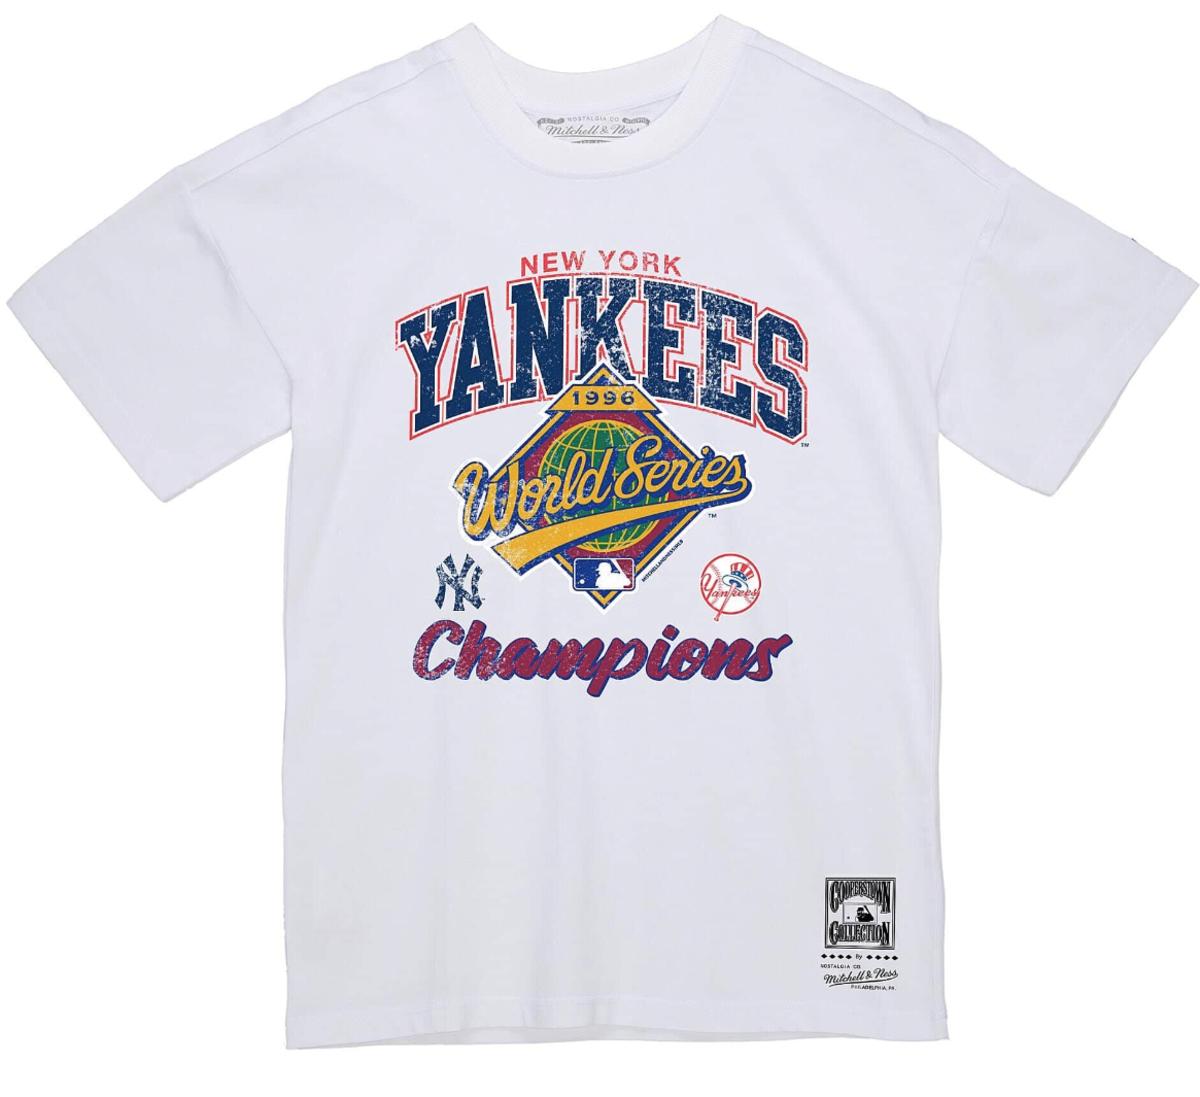 World Series Champs Tee New York Yankees 1996 - $38.00